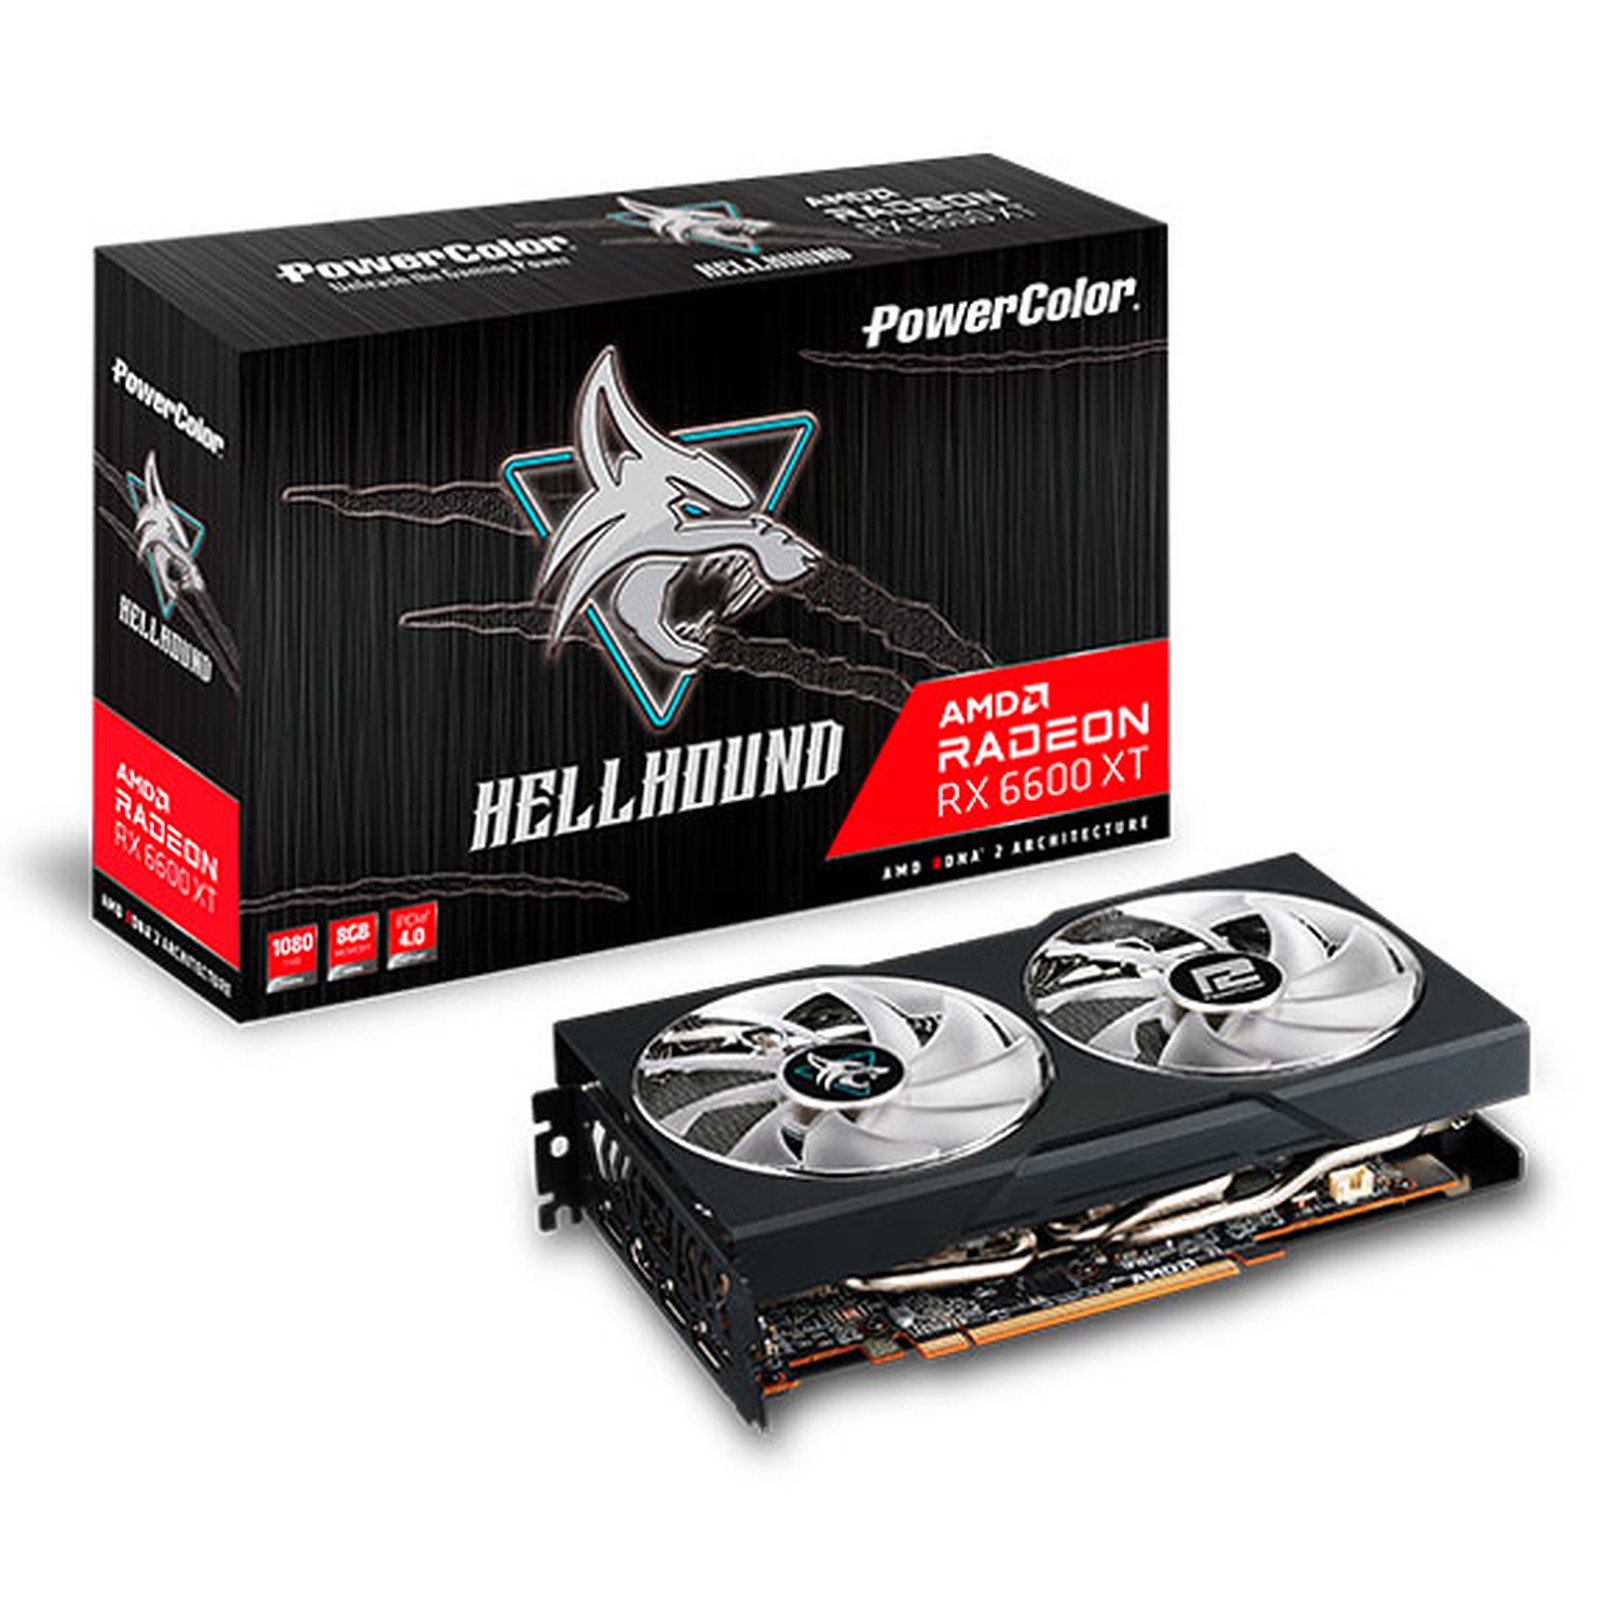 PowerColor Hellhound AMD Radeon RX 6600 XT 8GB GDDR6 - Carte graphique PowerColor